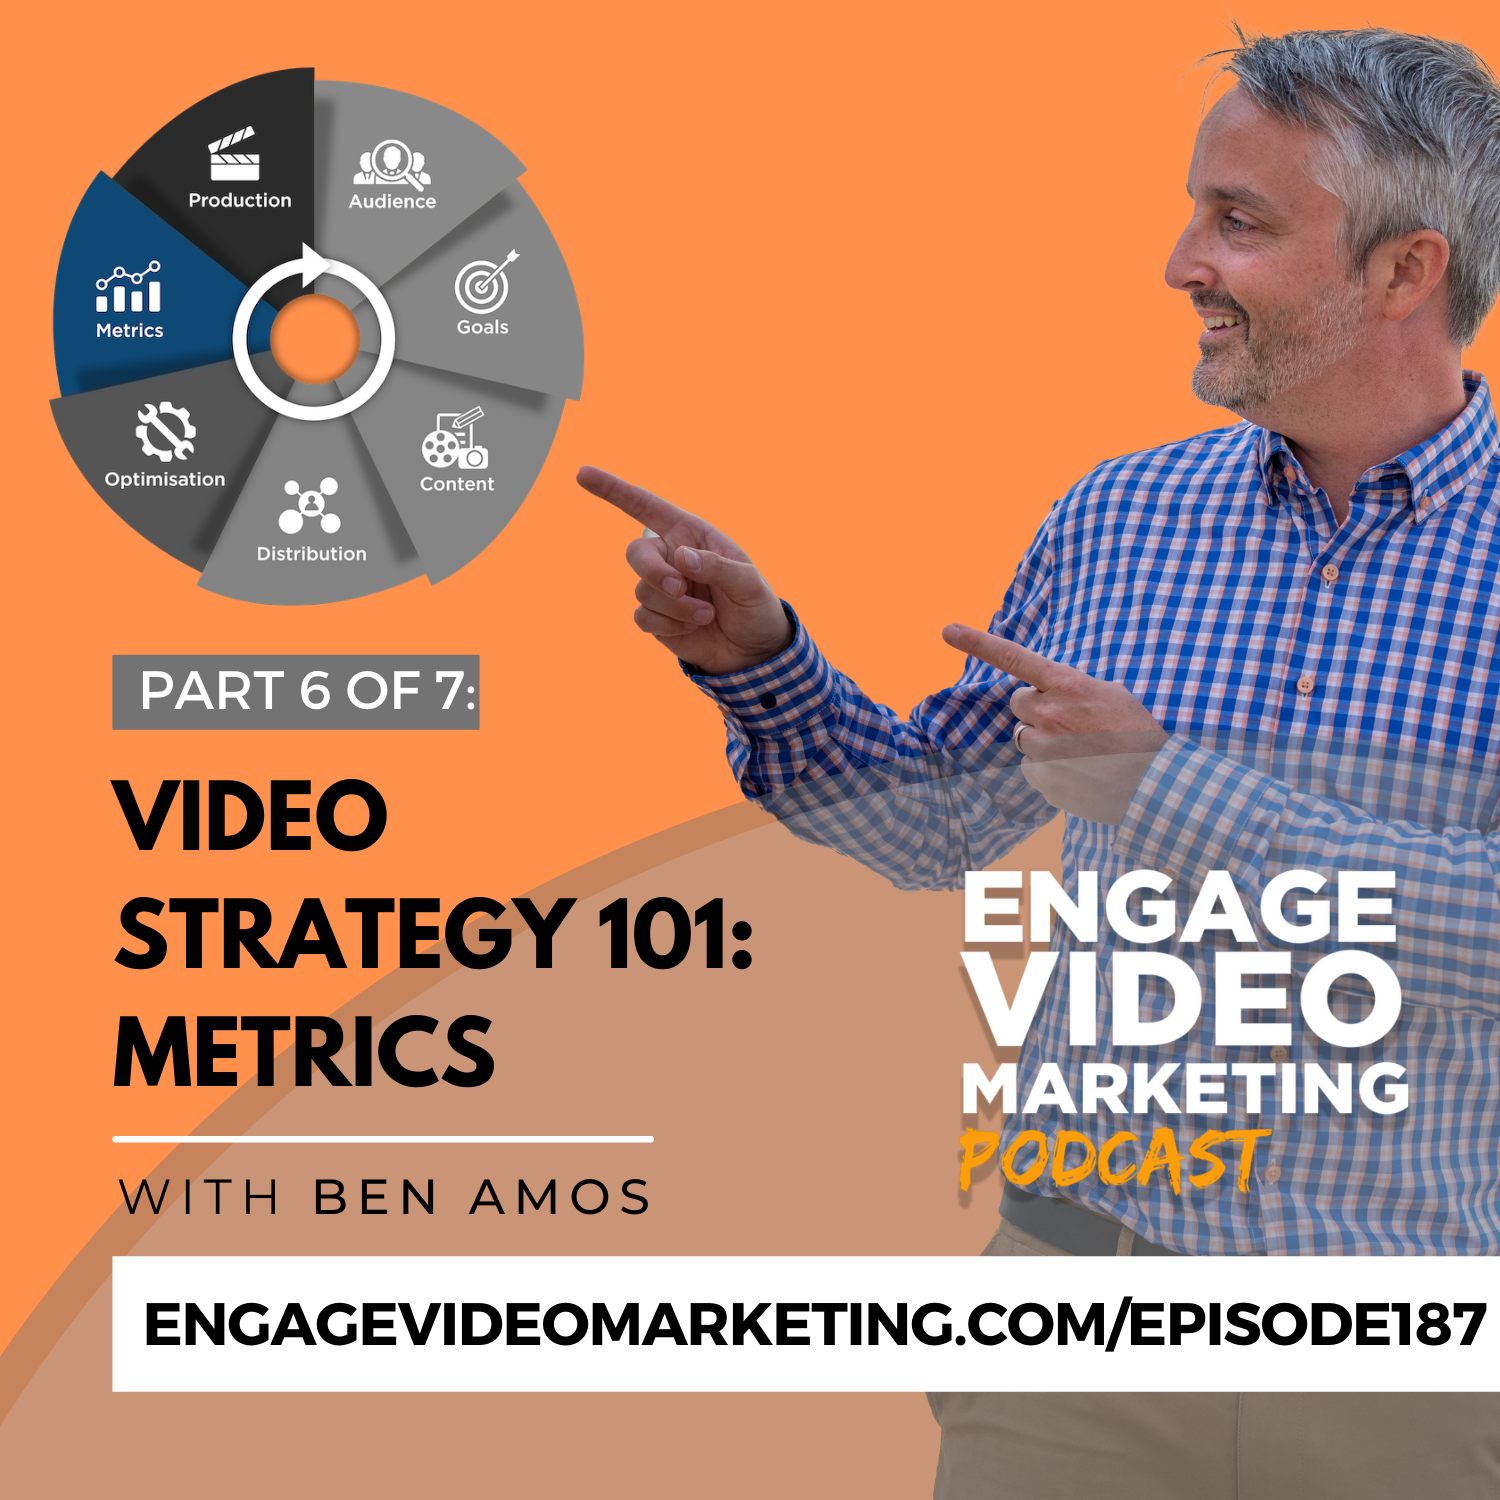 Video Strategy 101: Metrics